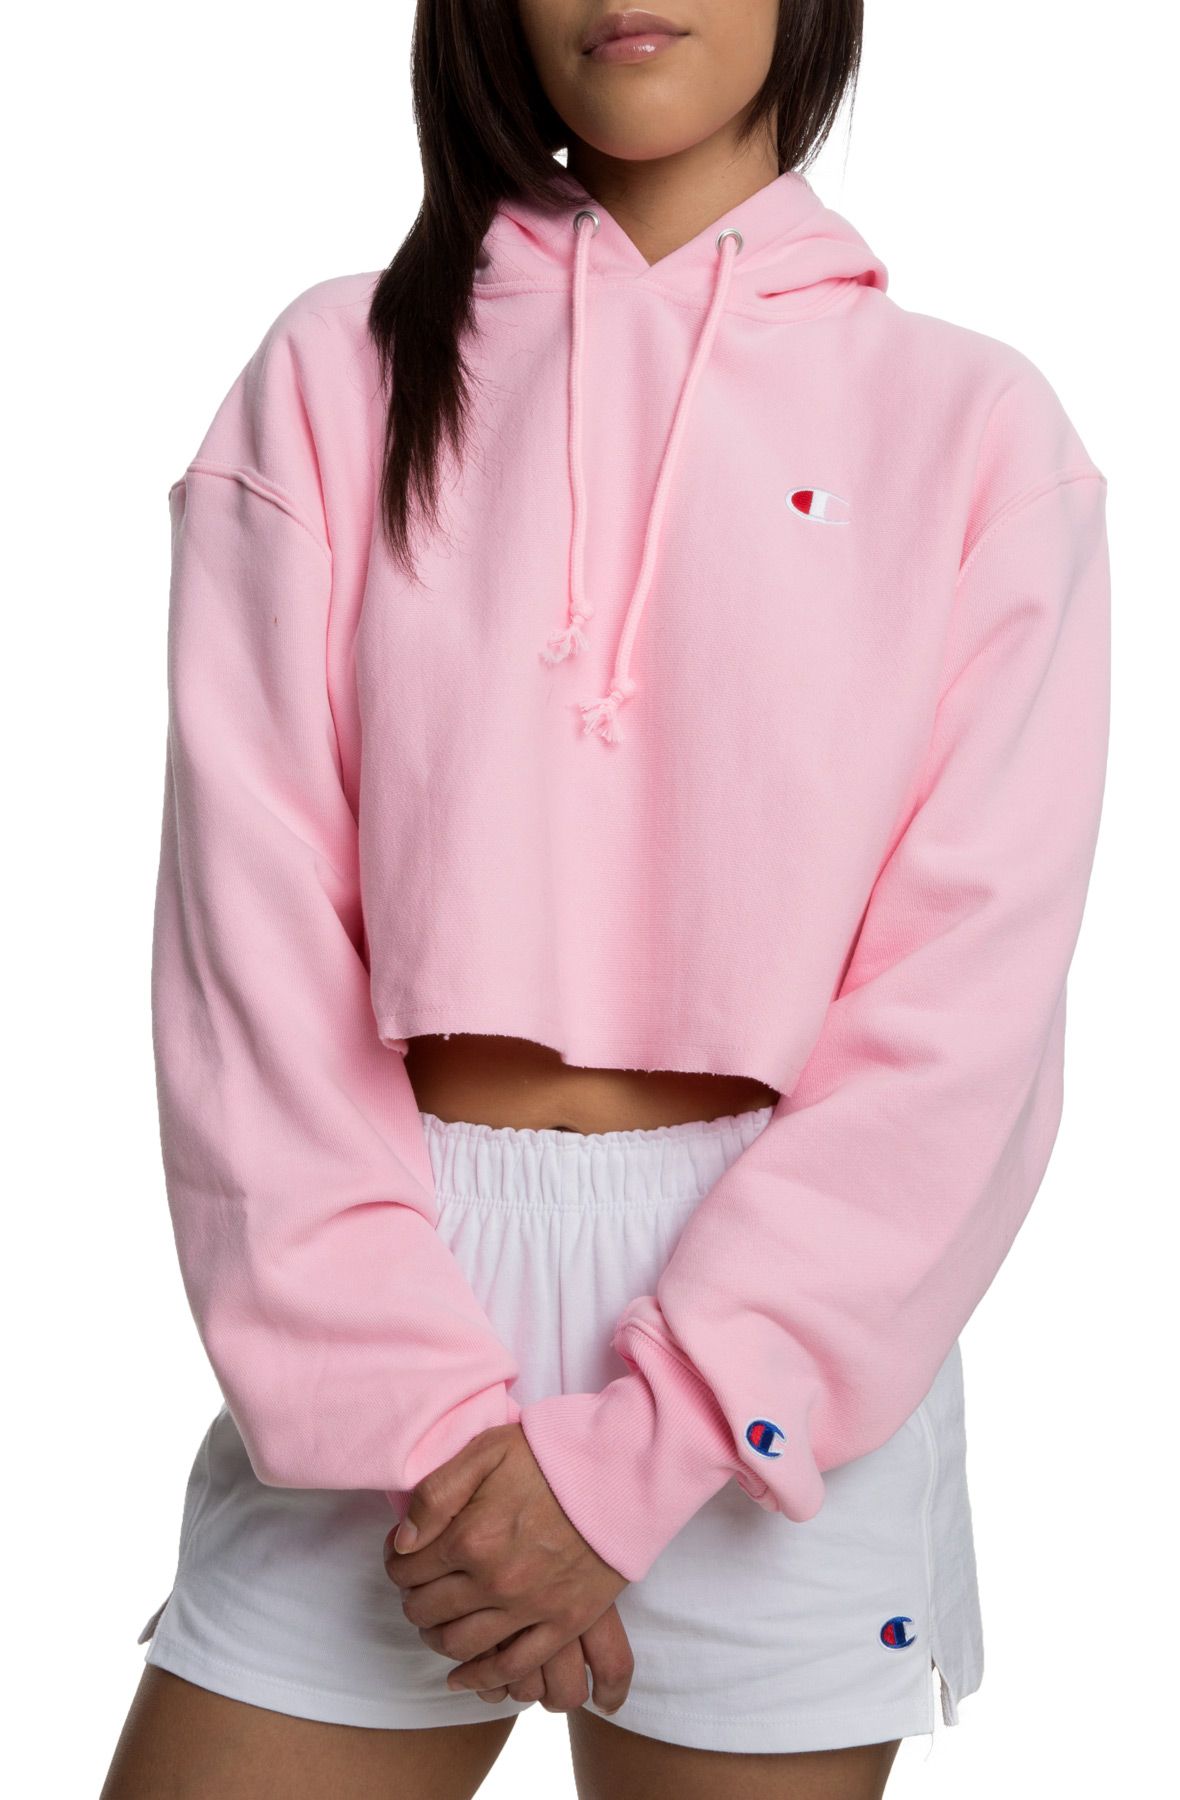 champion hoodie pink womens